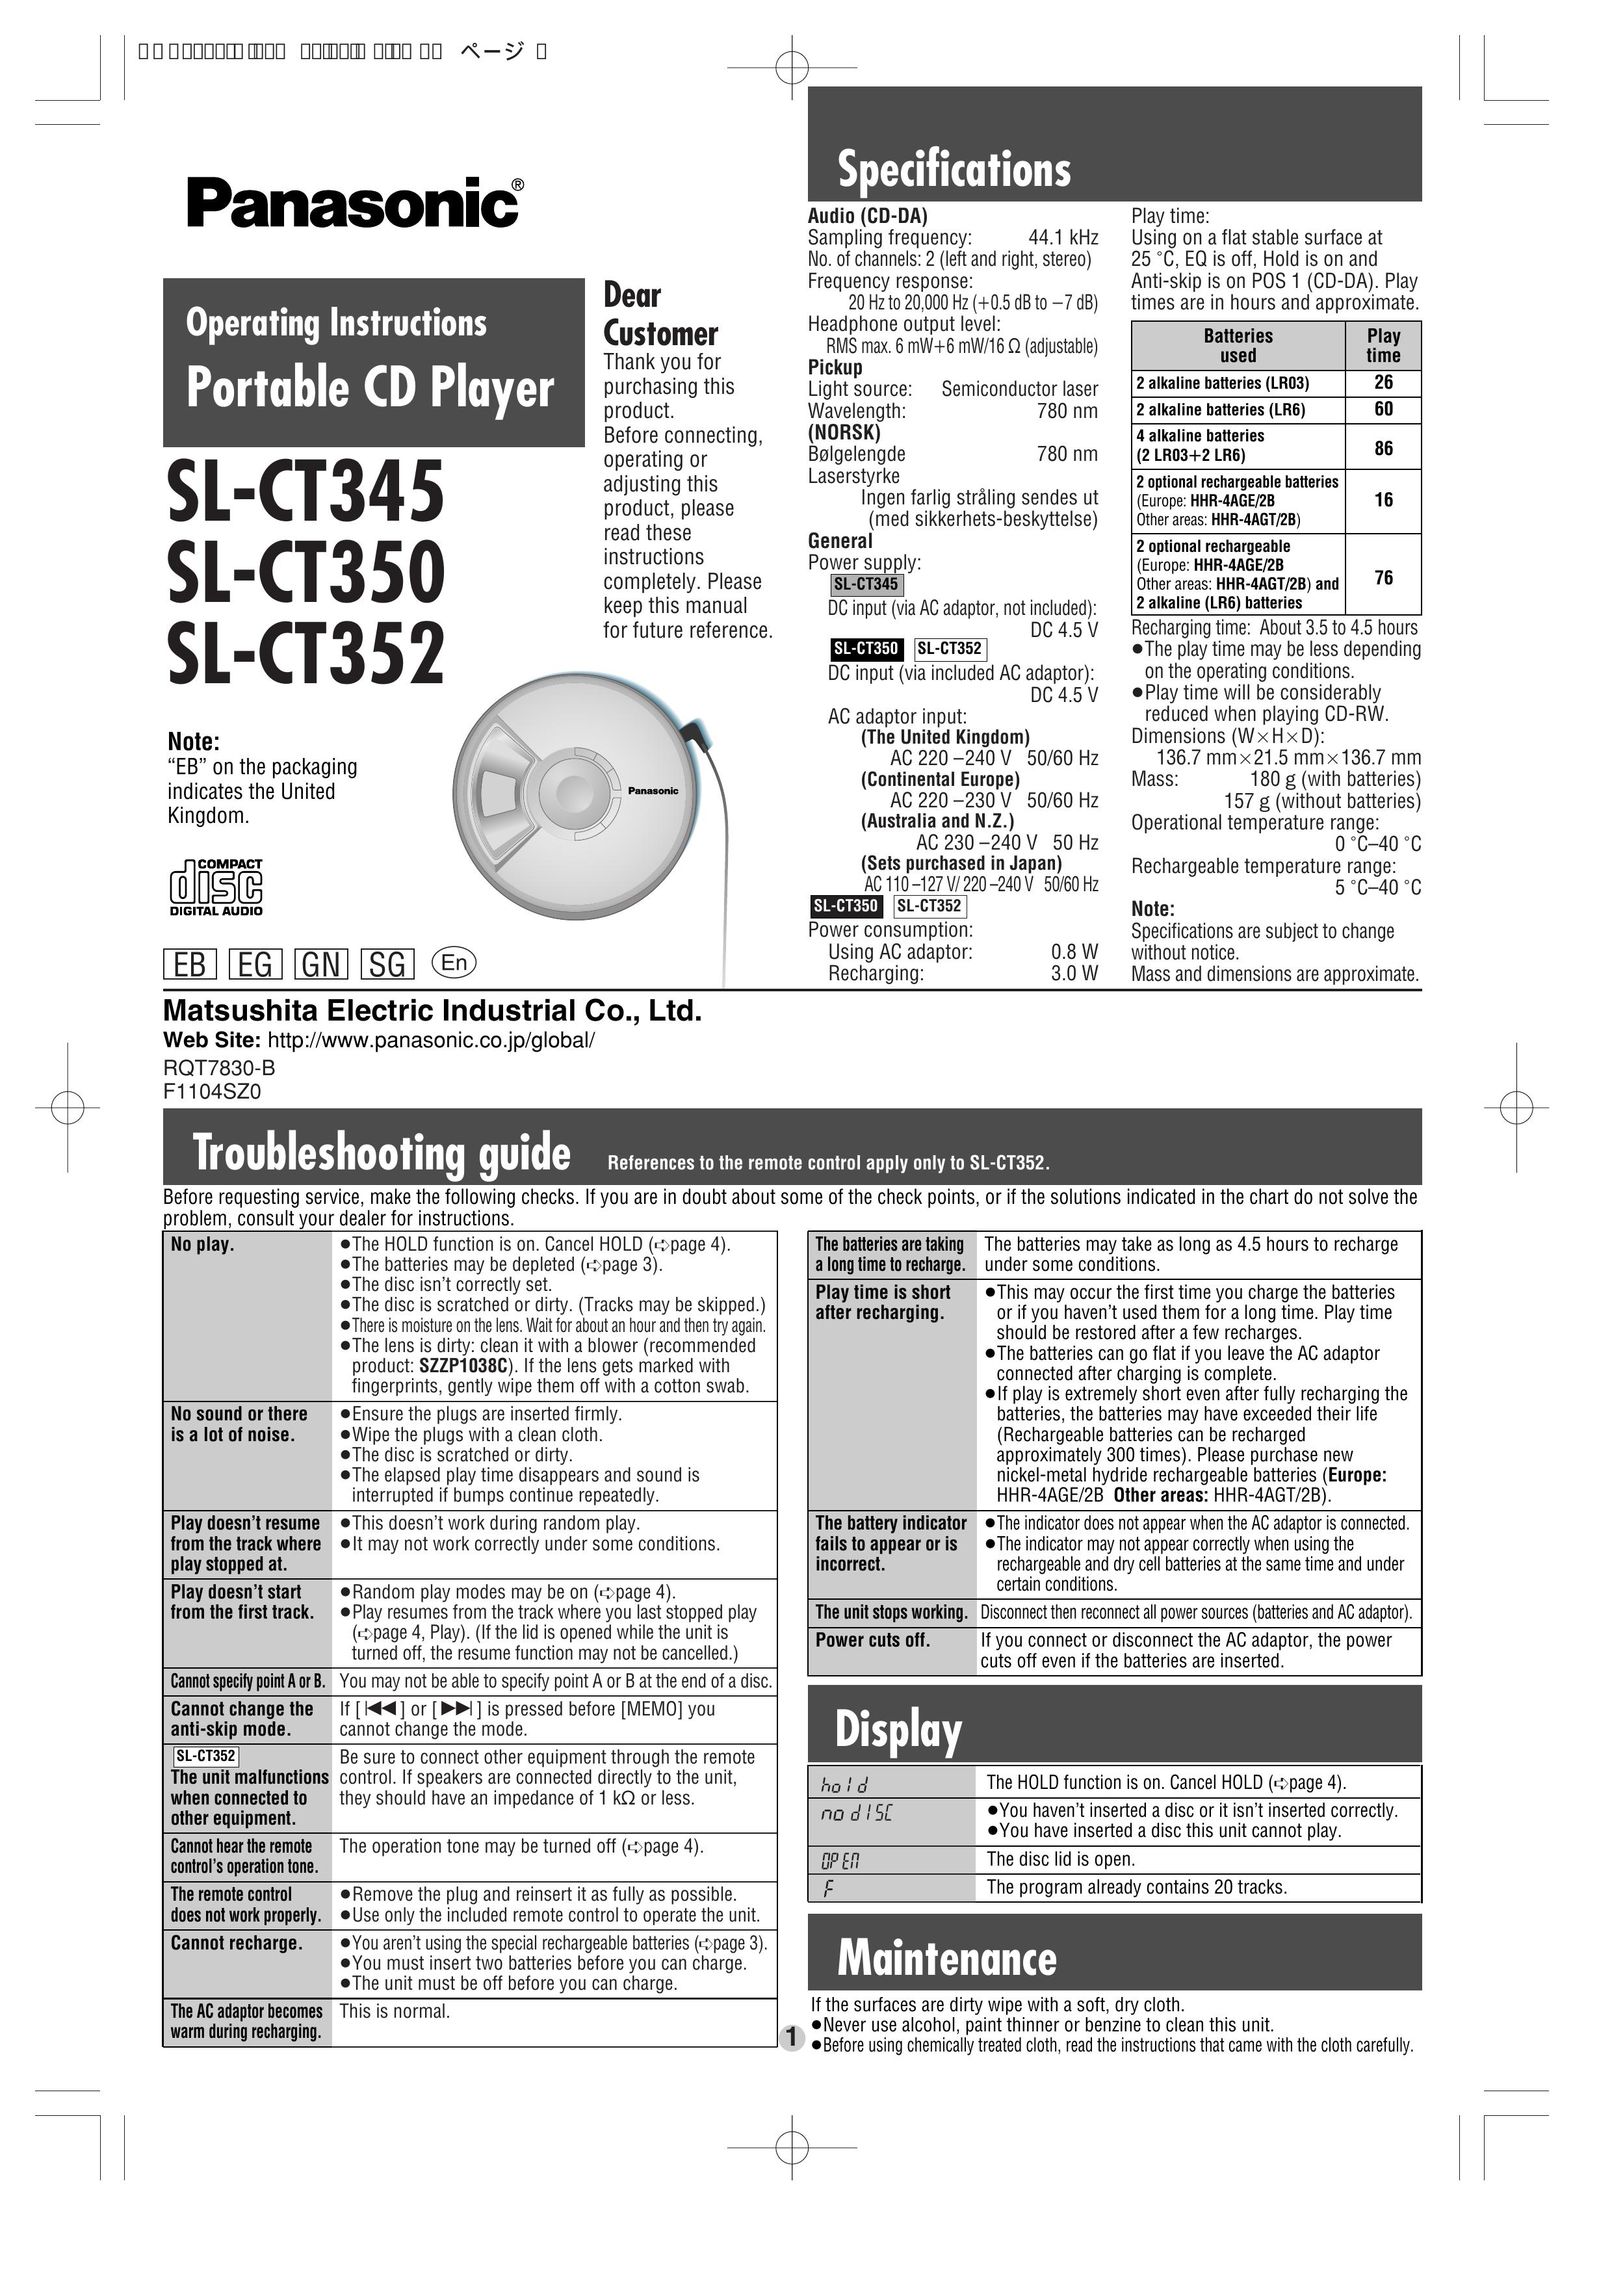 Panasonic SL-CT352 Portable CD Player User Manual